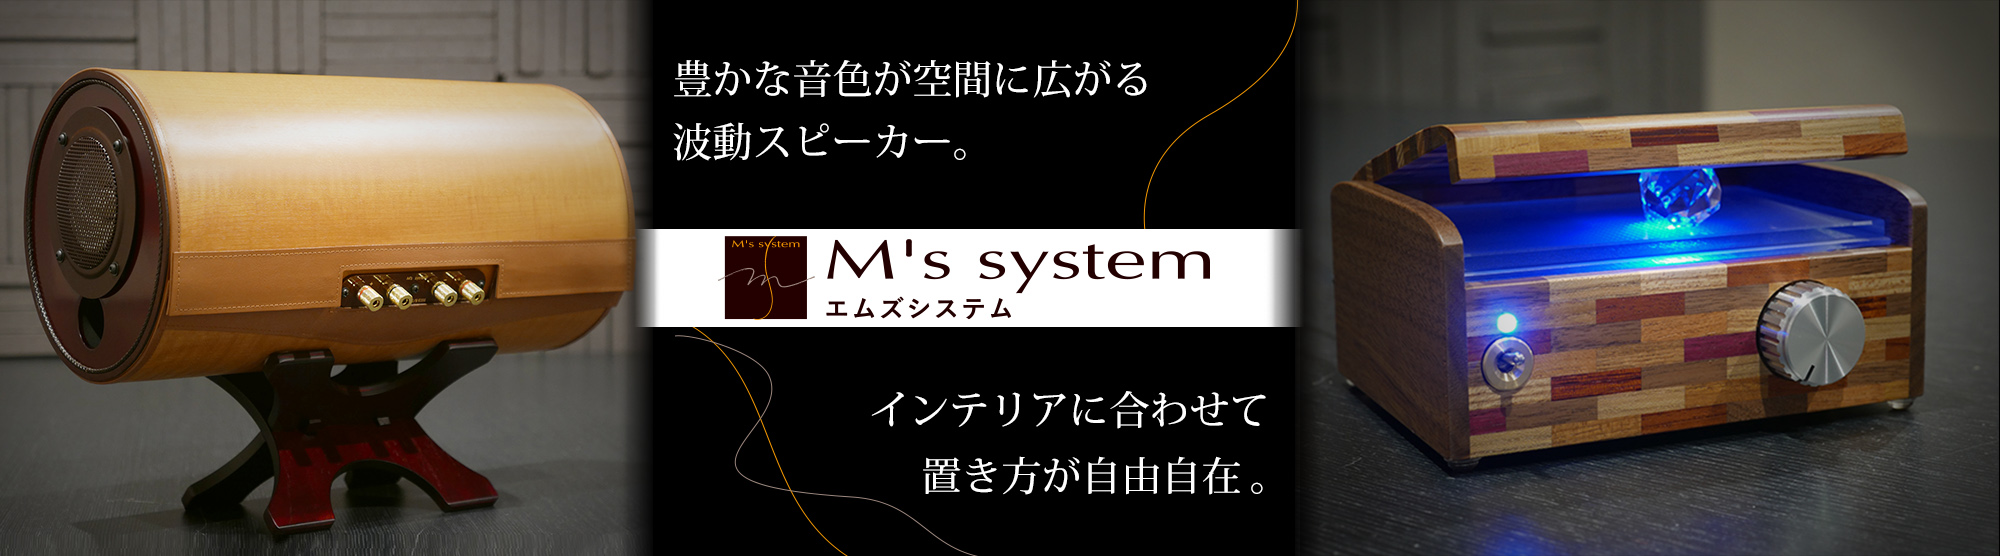 M's system 波動スピーカー